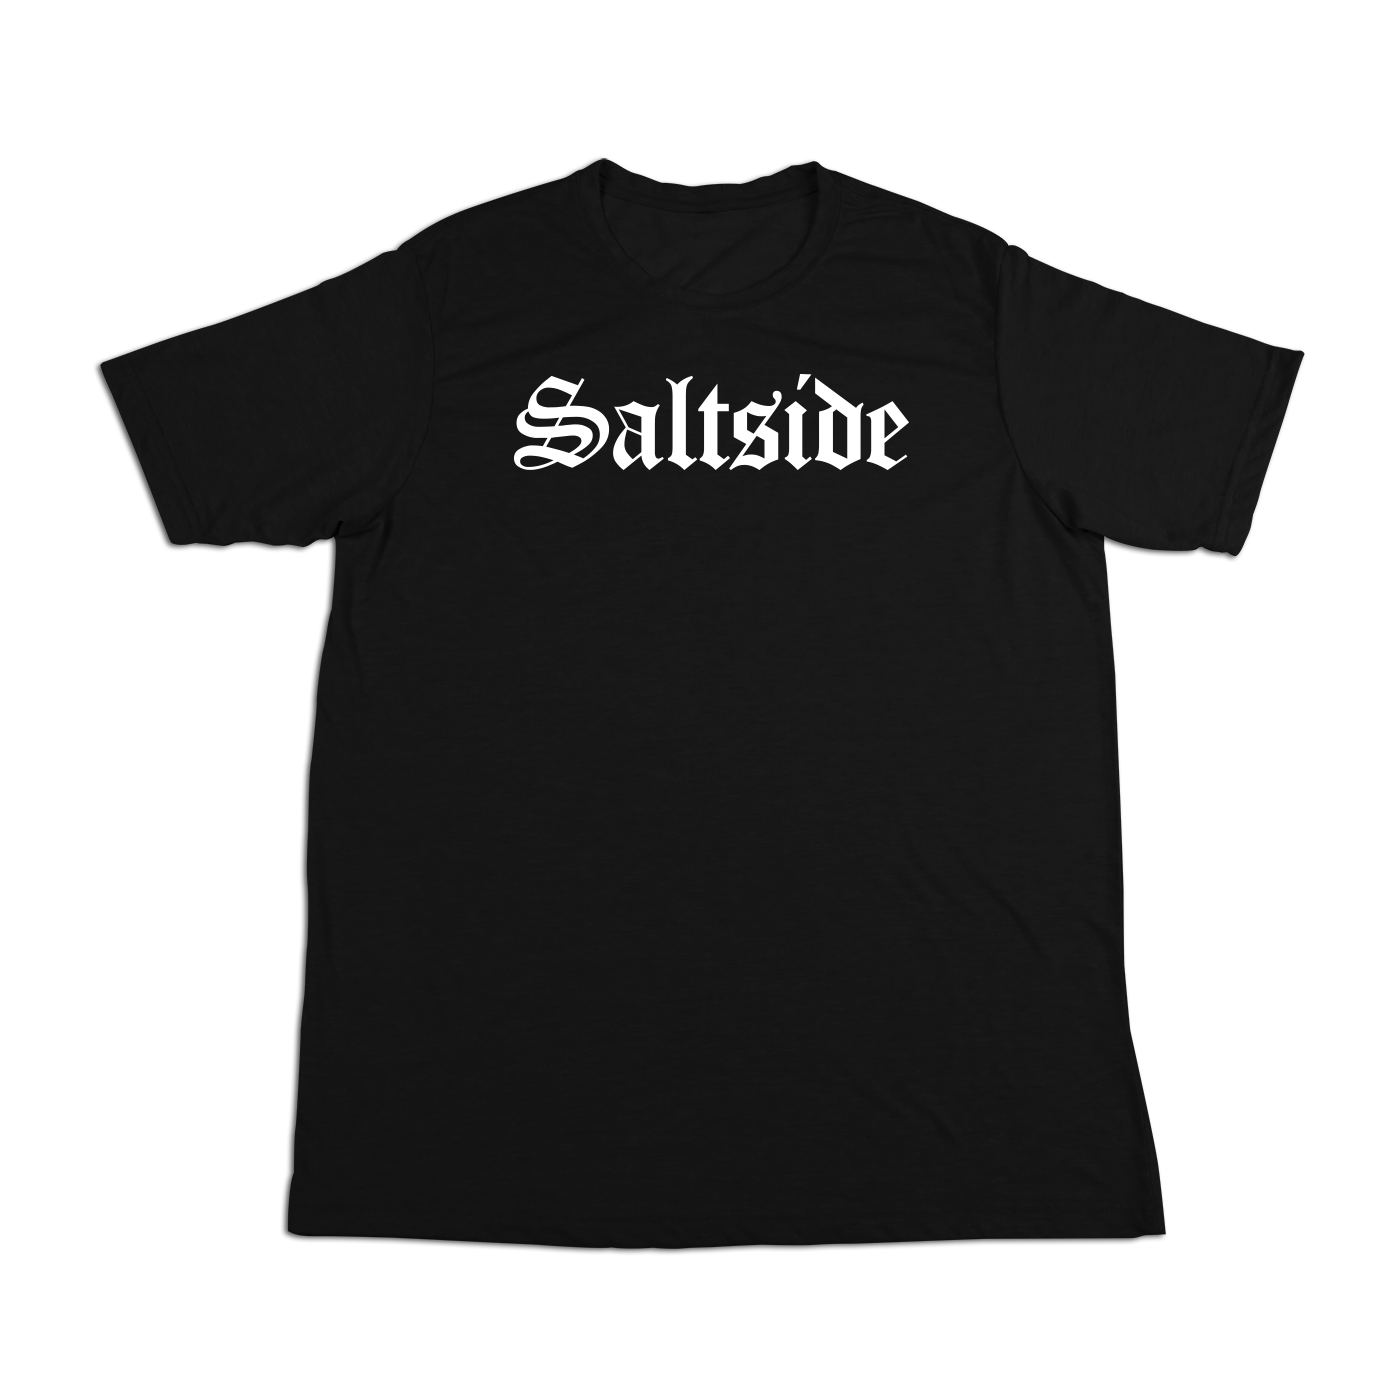 #SALTSIDE Soft Short Sleeve Shirt - Hat Mount for GoPro